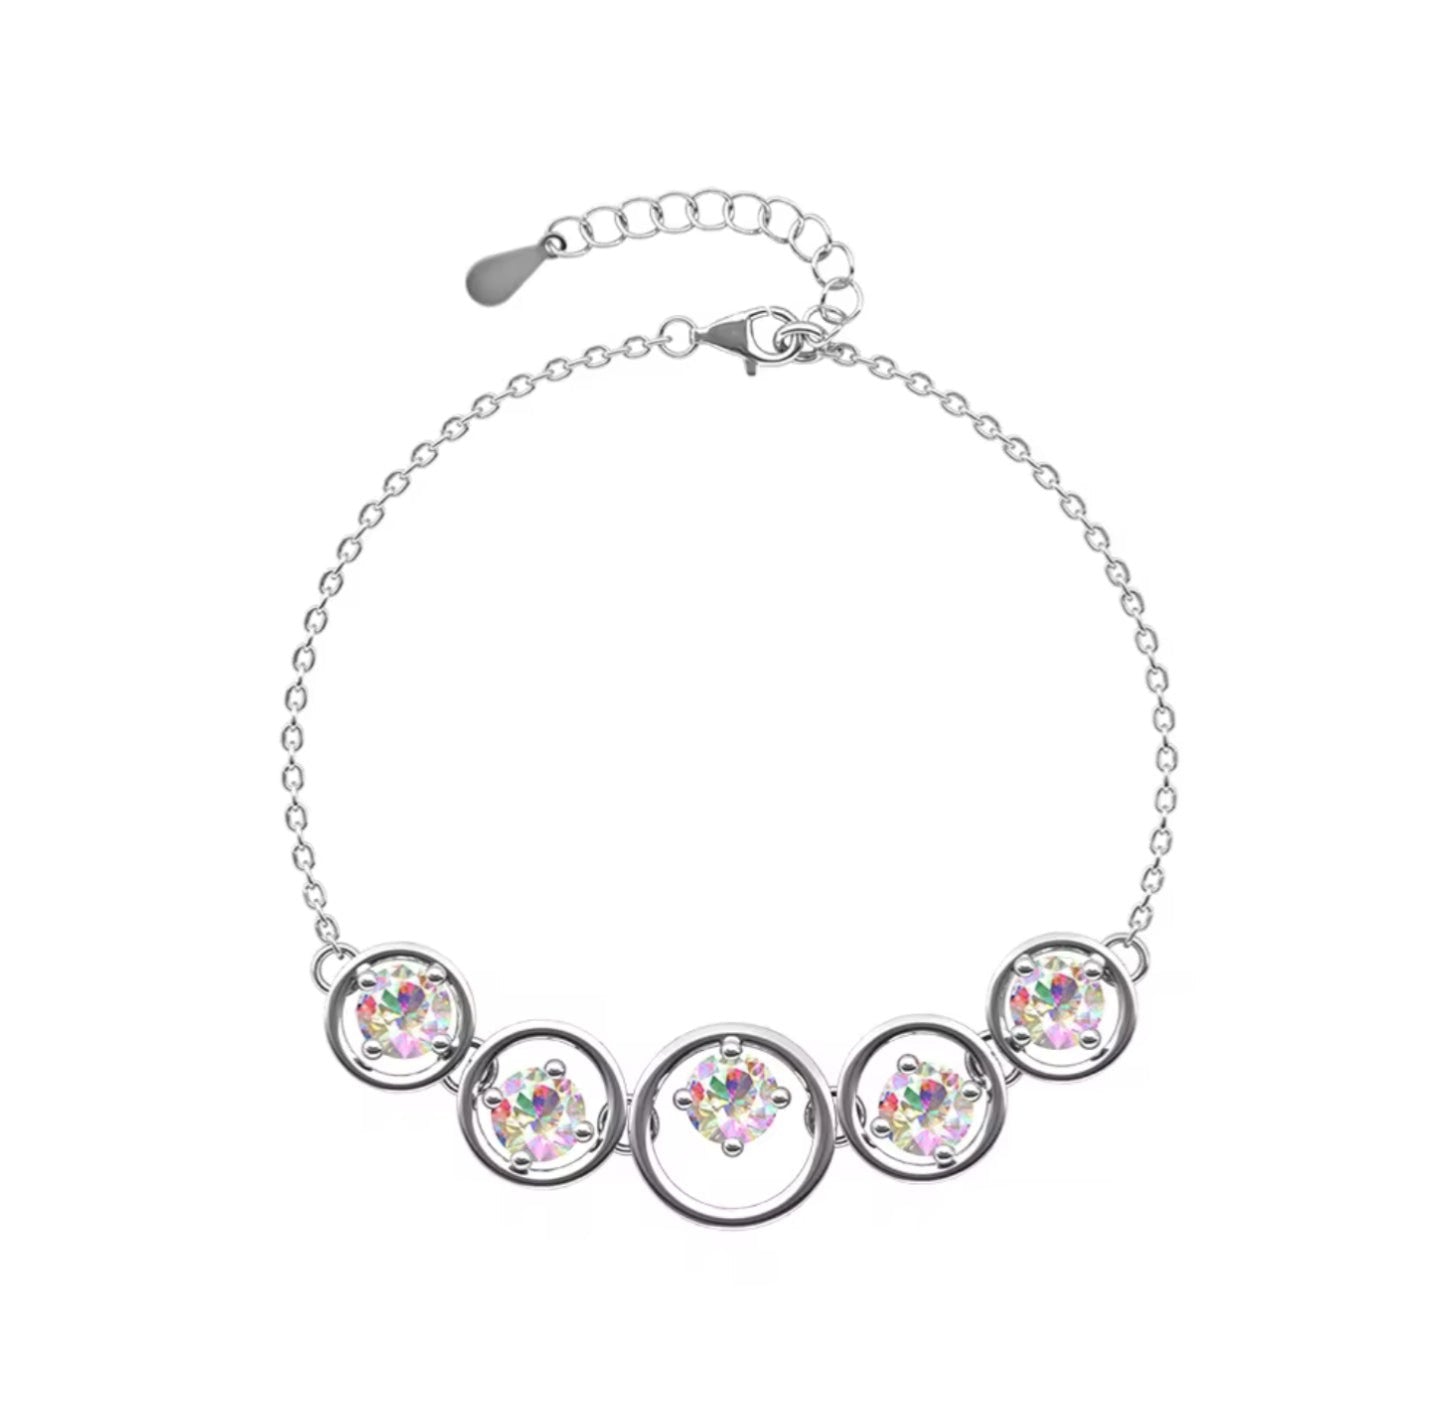 Circle motif bracelet